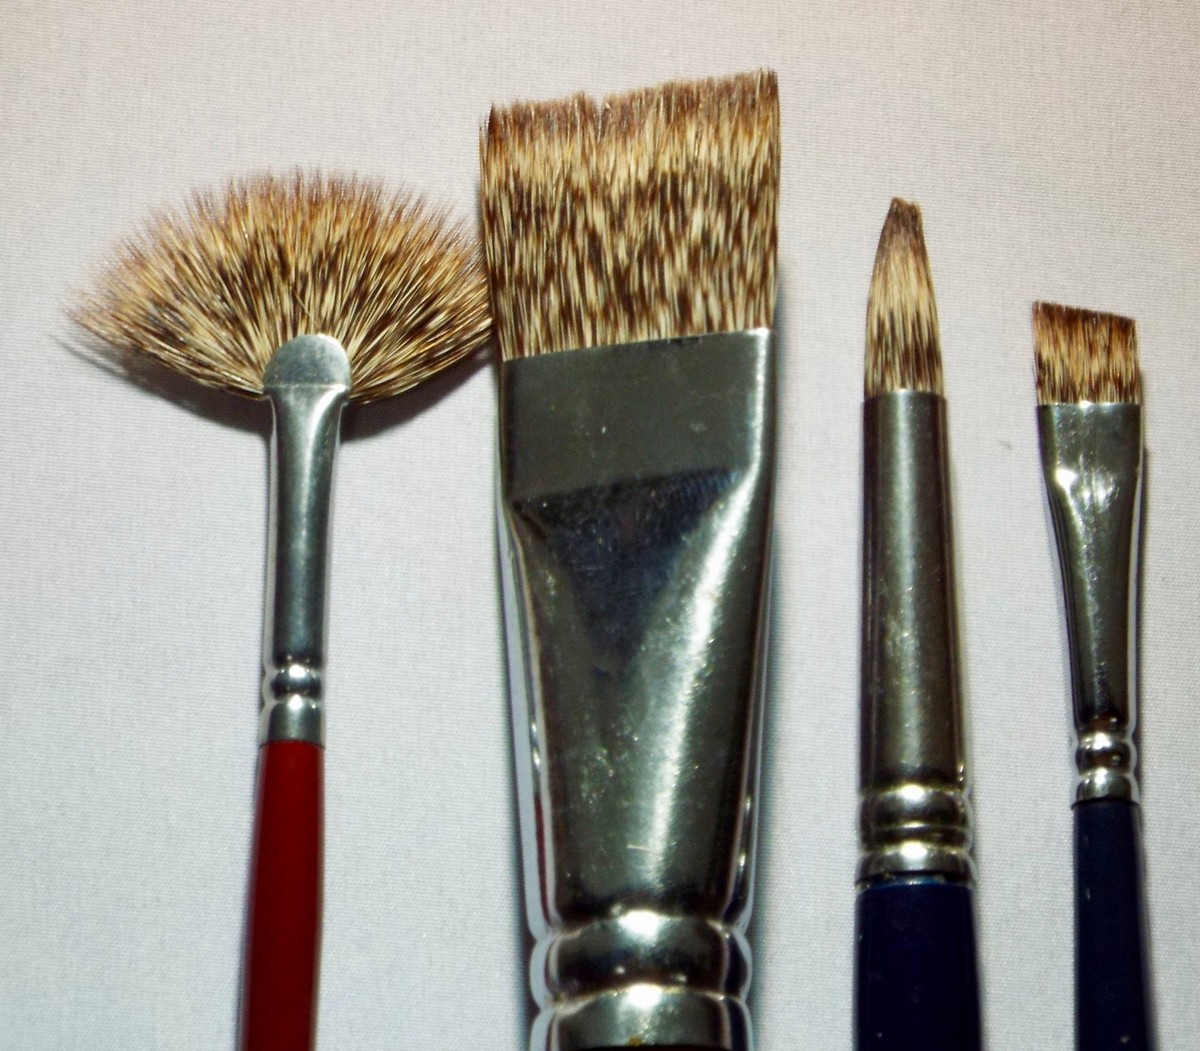 Royal Sable Brushes Long Handle - 80% off